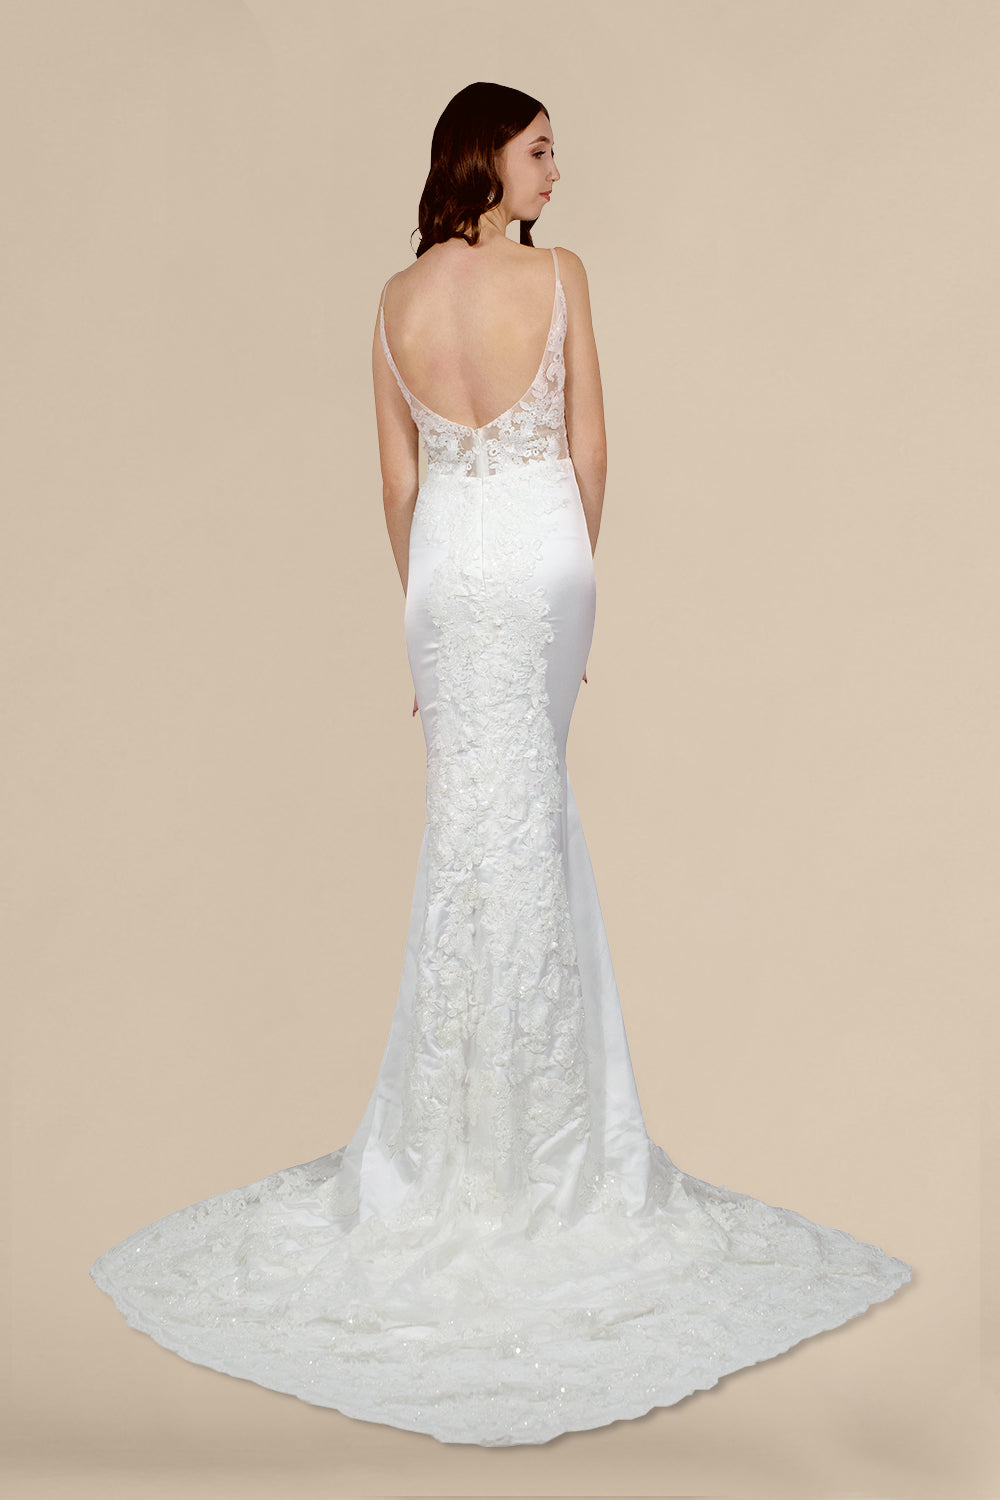 custom bridal dressmaker australian perth bespoke wedding gowns envious bridal 